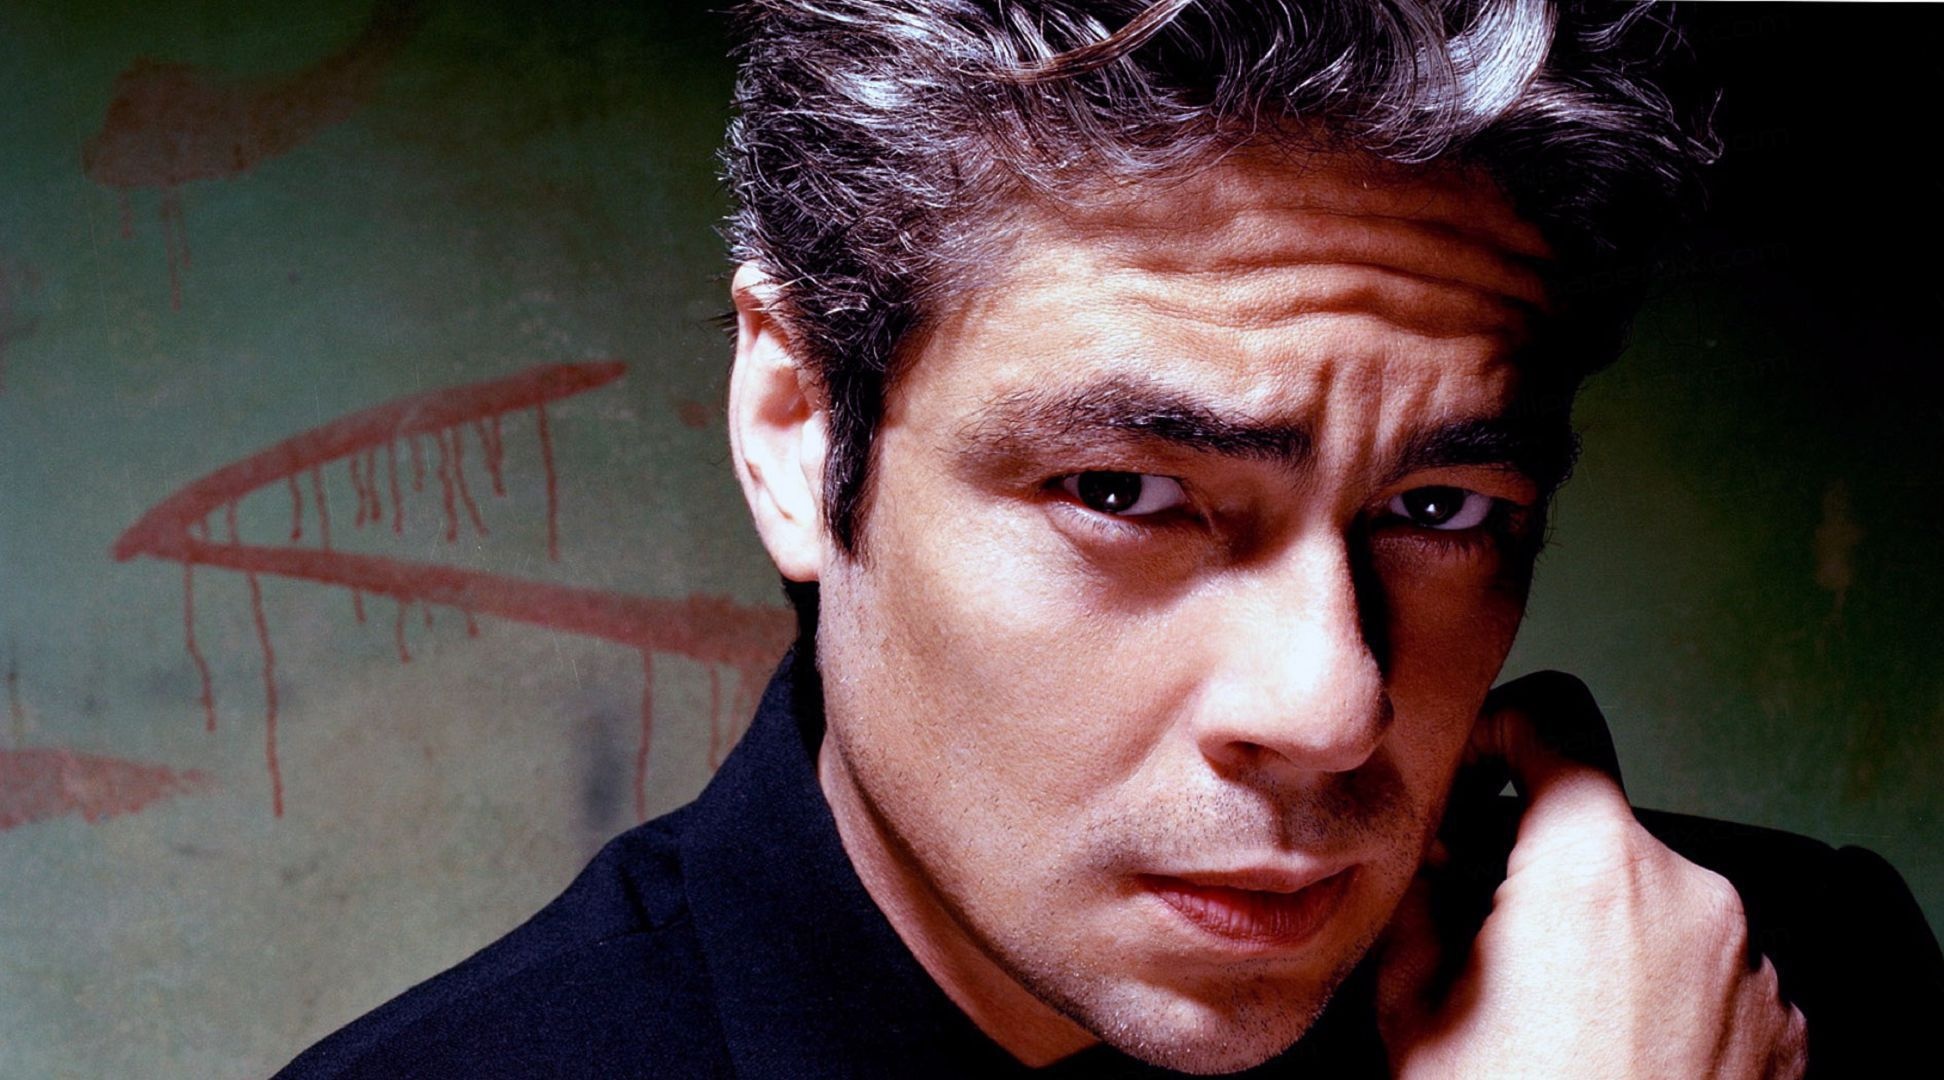 Benicio Del Toro, HD desktop wallpaper, Actor's photo, Stylish display, 1950x1080 HD Desktop